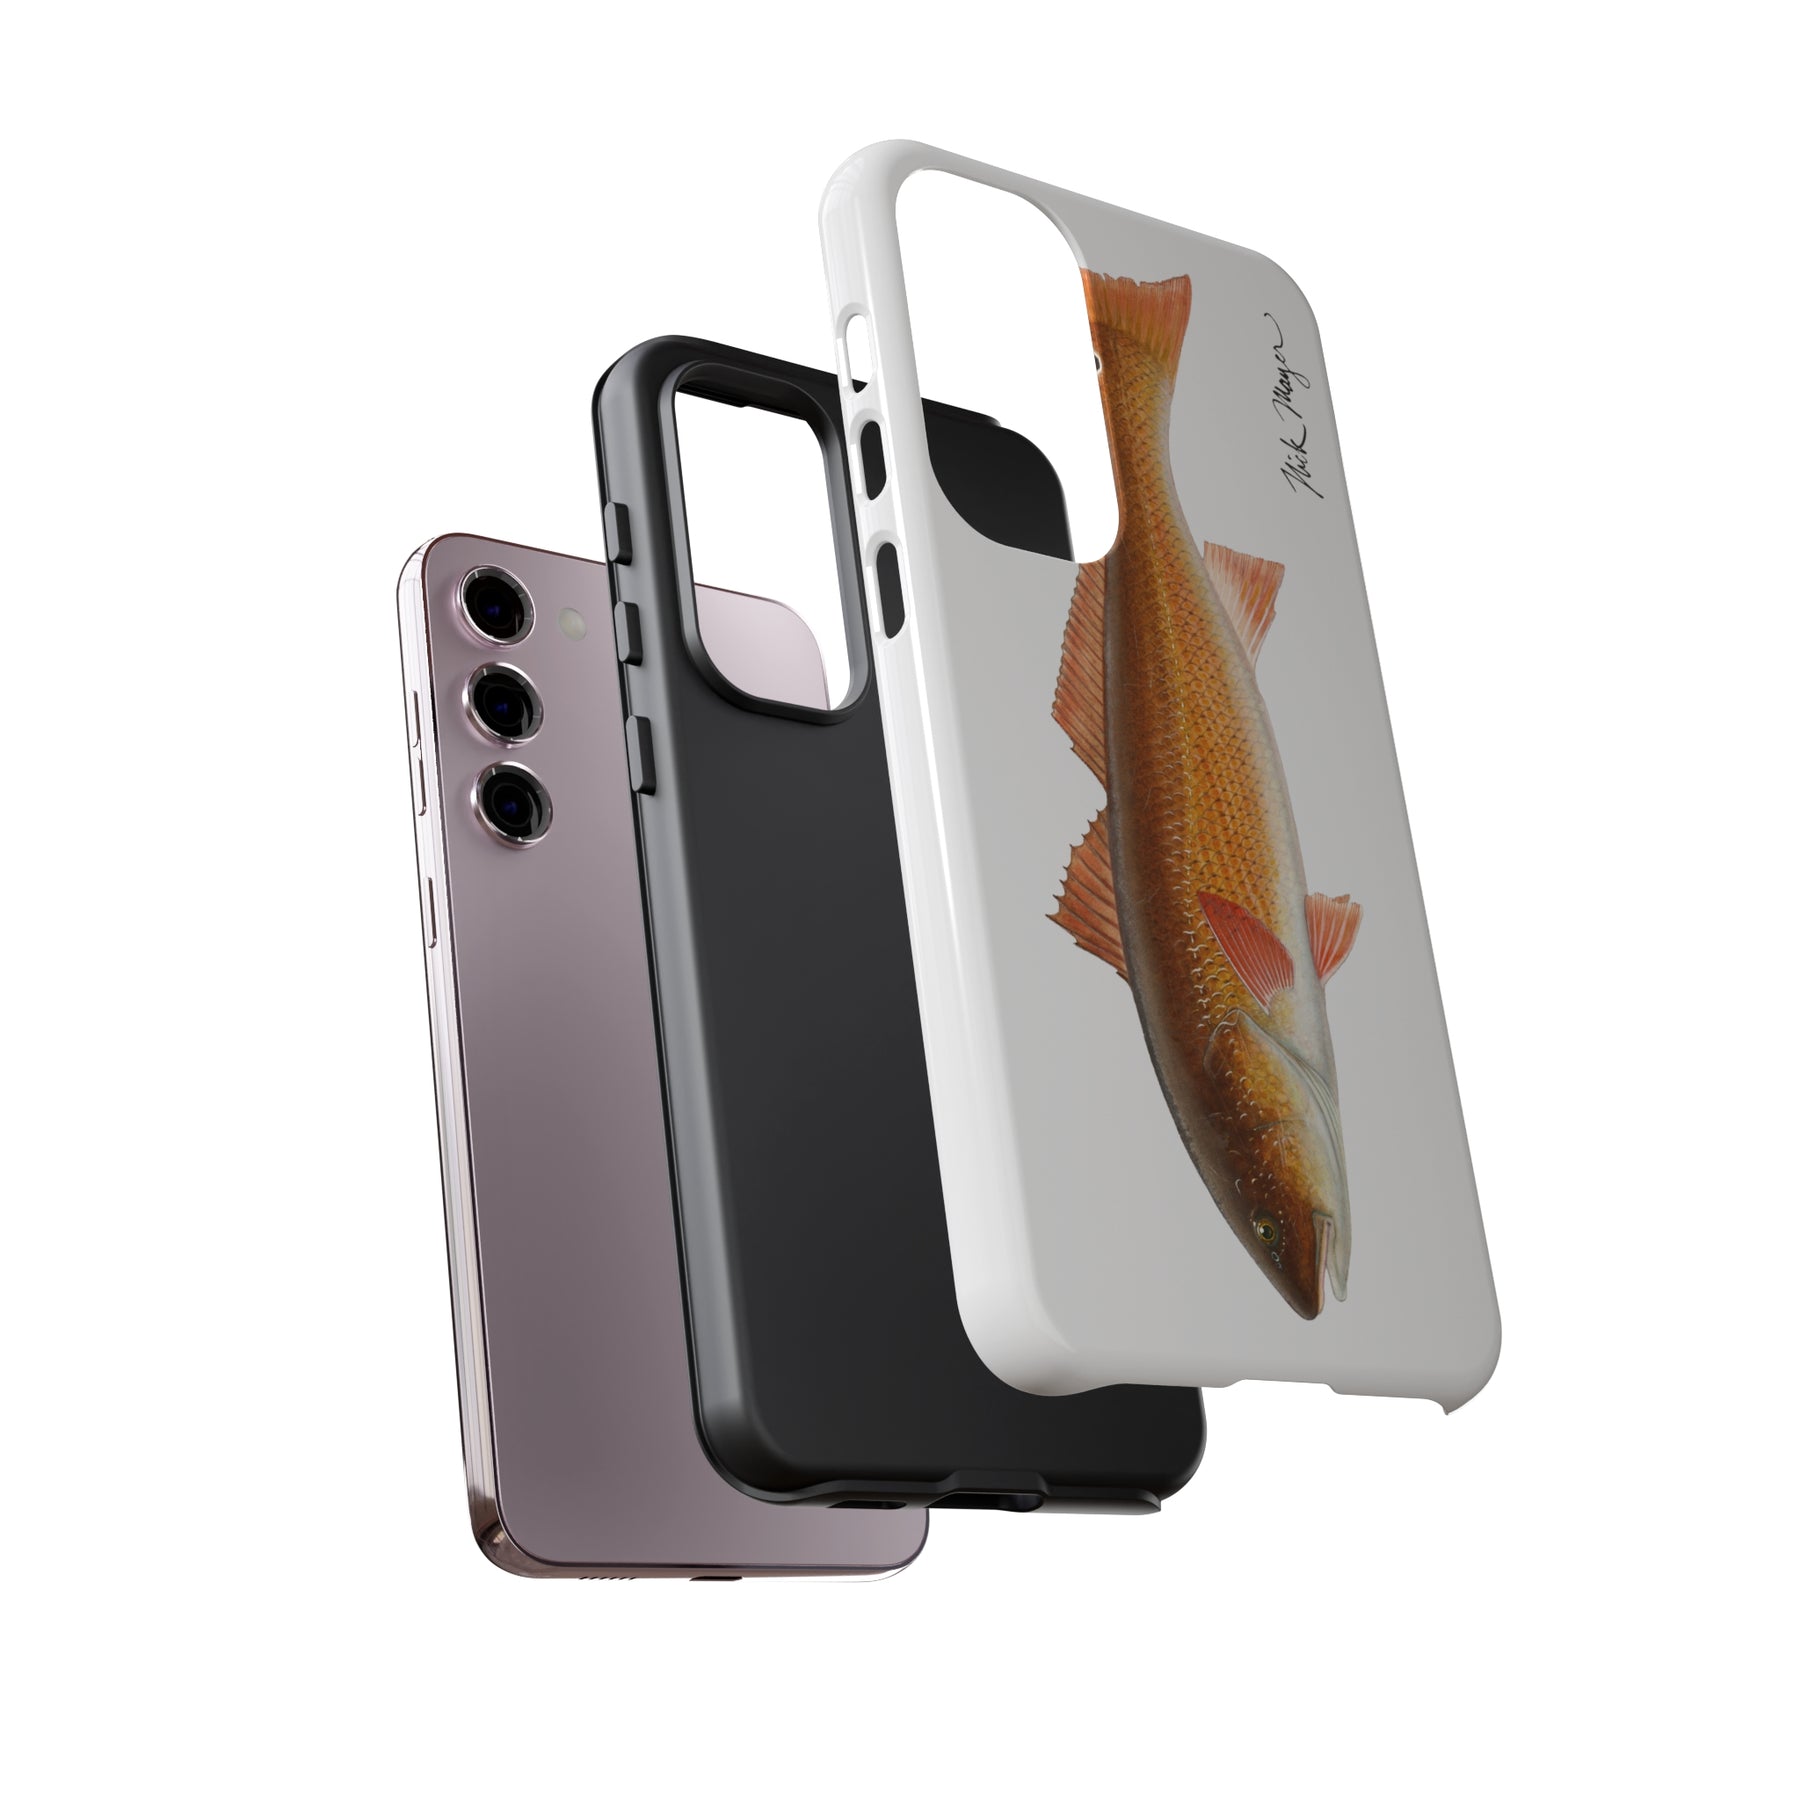 Redfish Phone Case (Samsung)